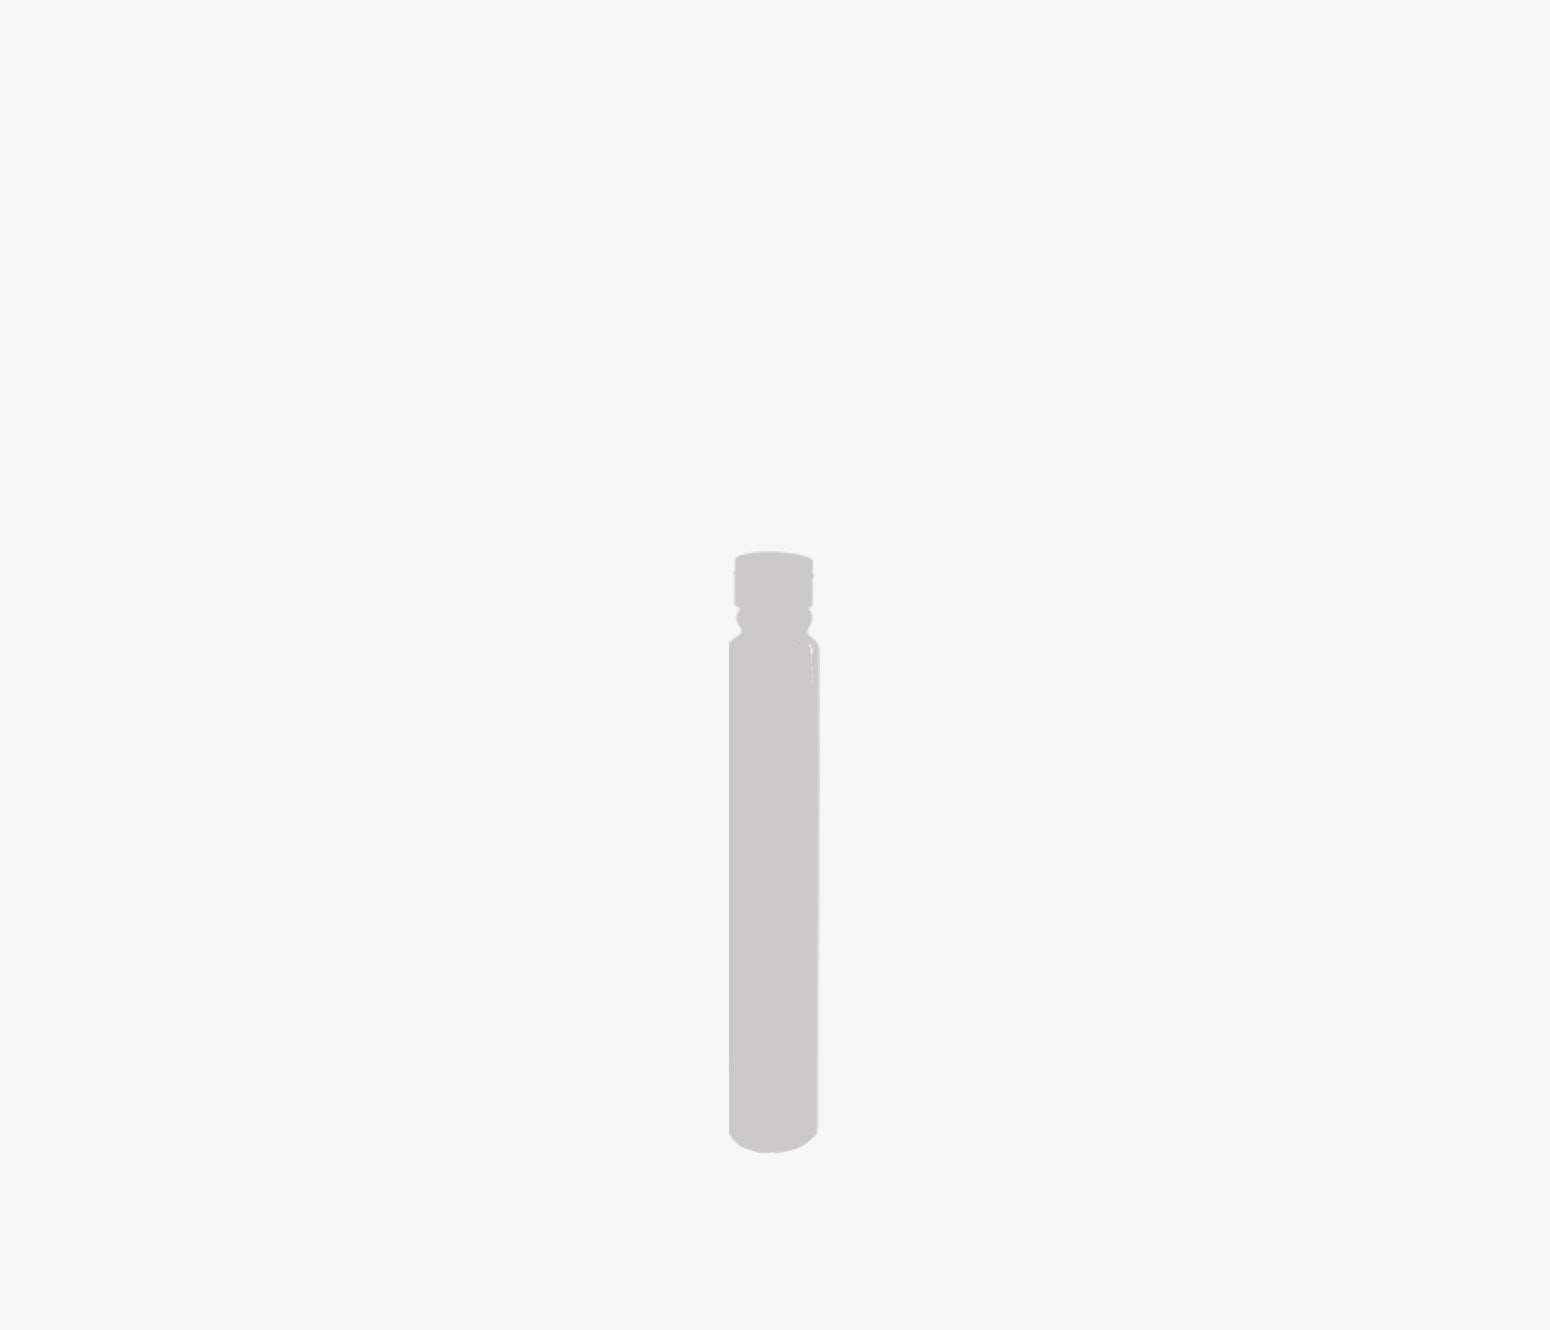 Maison Francis Kurkdjian - Amyris Homme - 1.5ml Sample - NXP8645 - Product Image - Fragrance - Les Senteurs